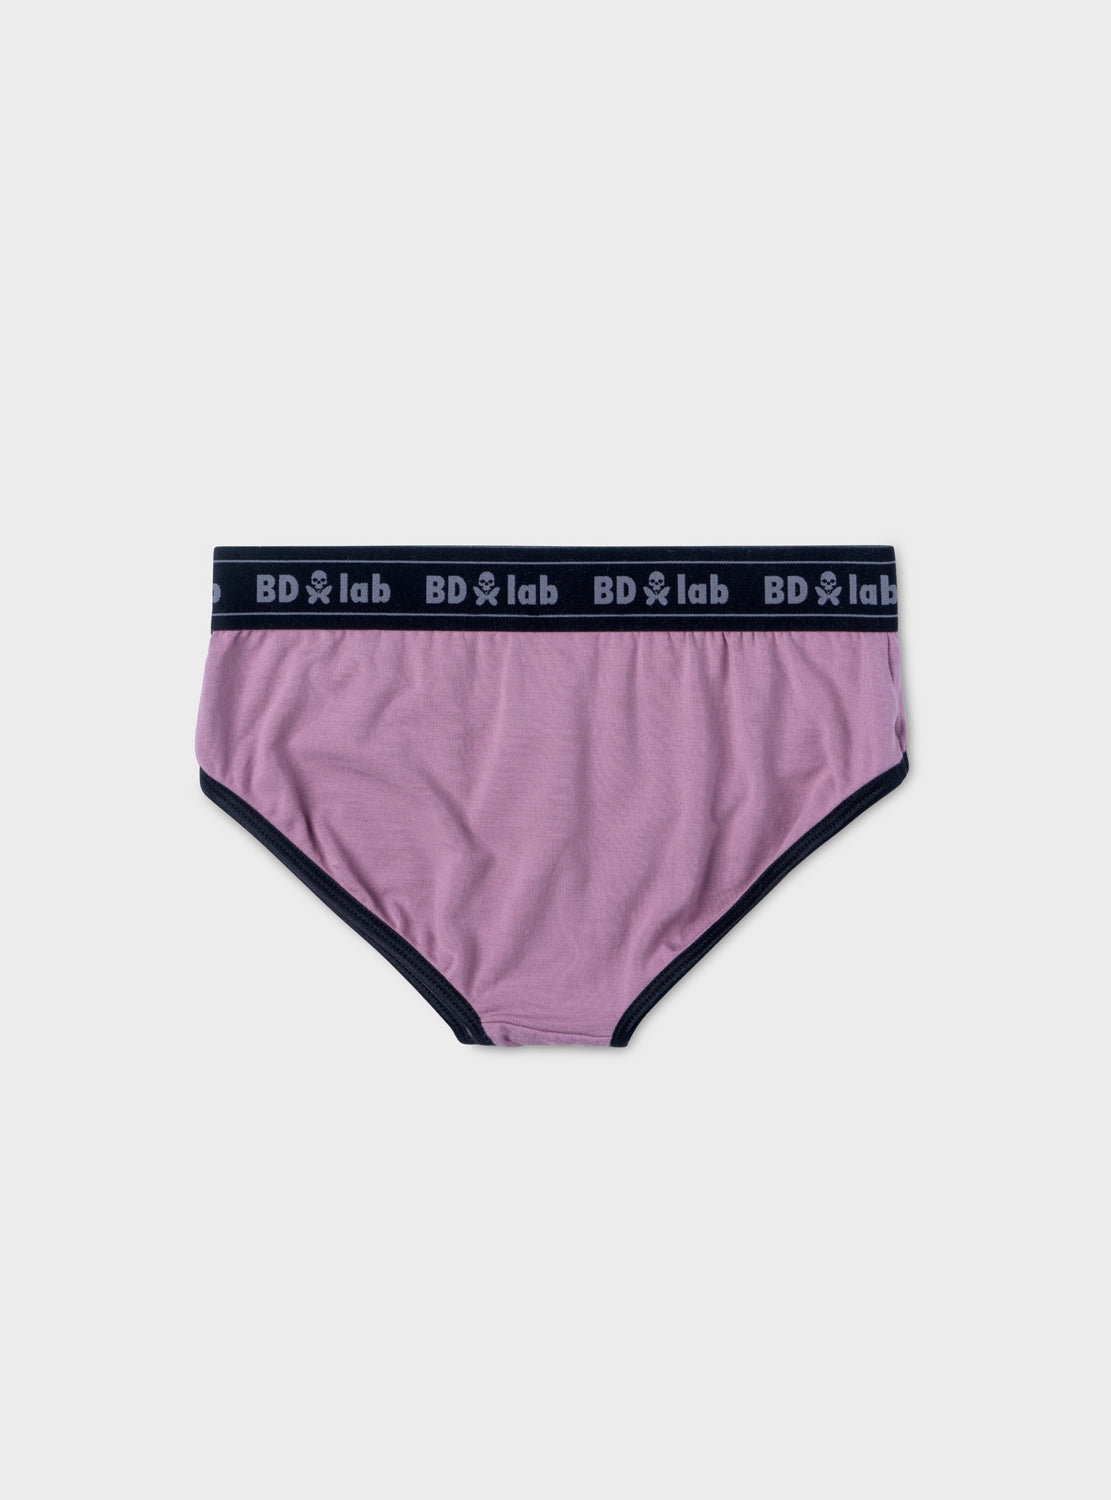 betty designs BDlab Sportswear apparel for Women underwear set